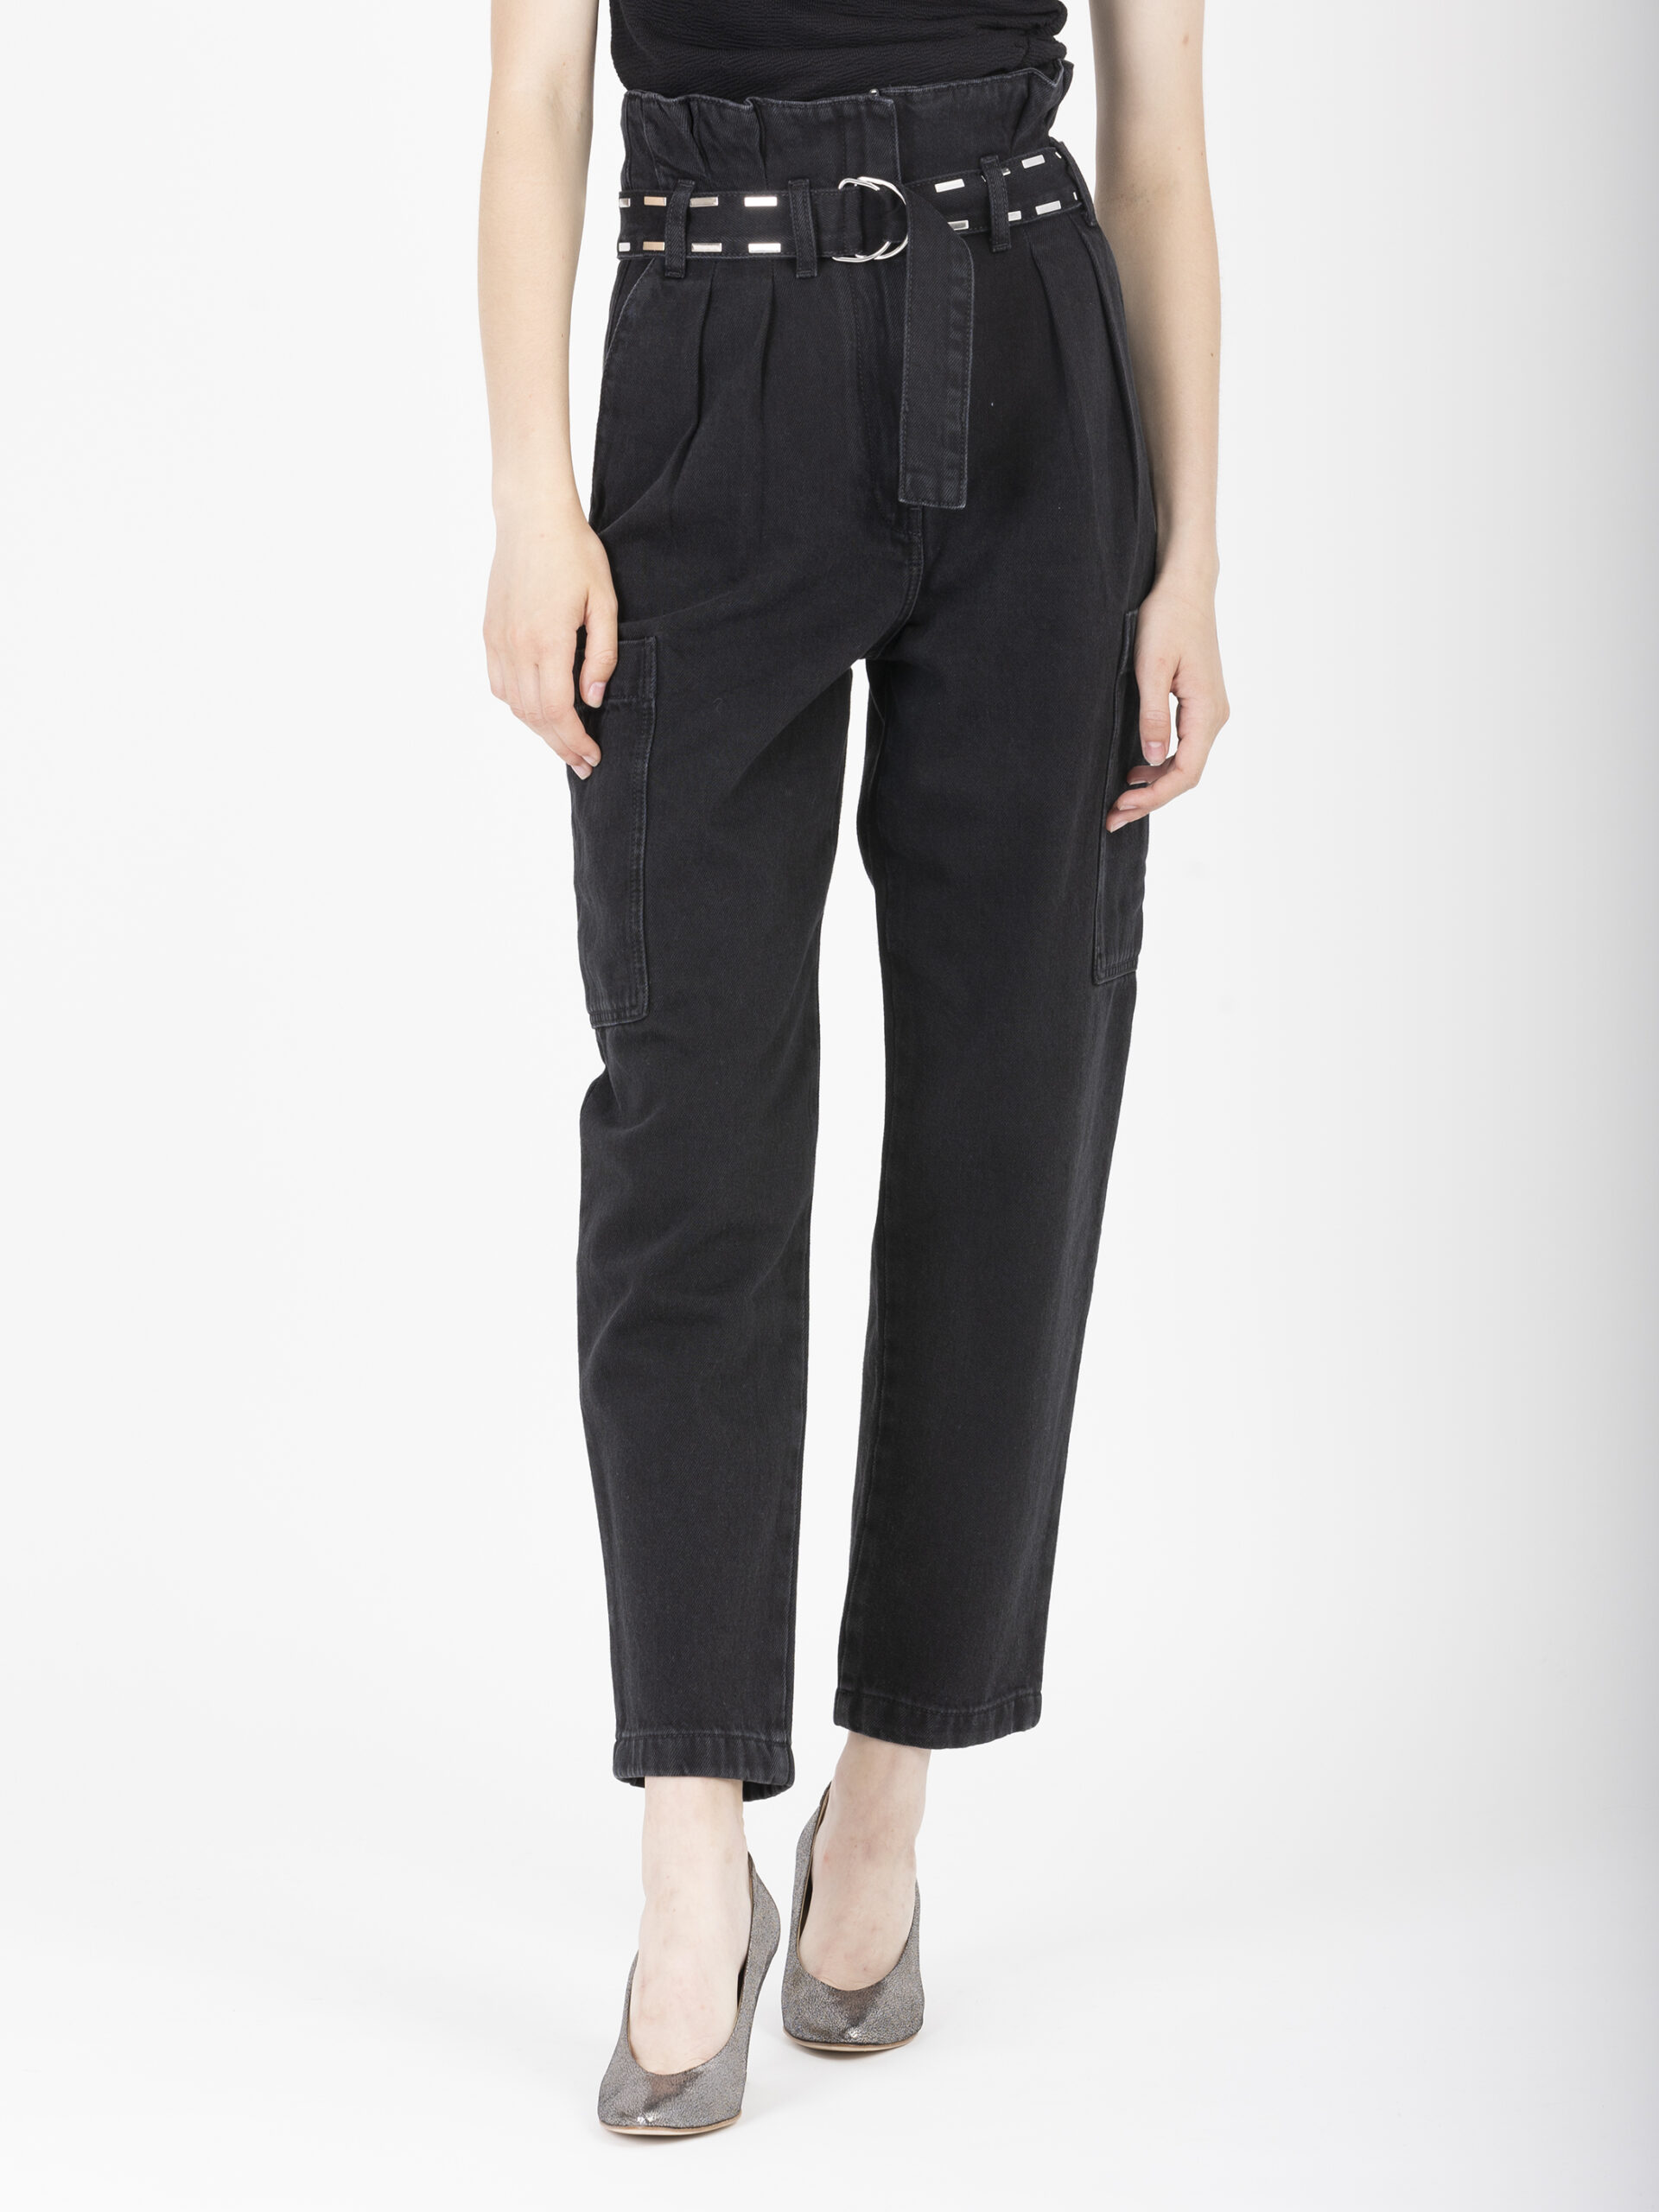 malti-jeans-high-waist-carrot-fit-studded-belt-black-iro-matchbxoathens